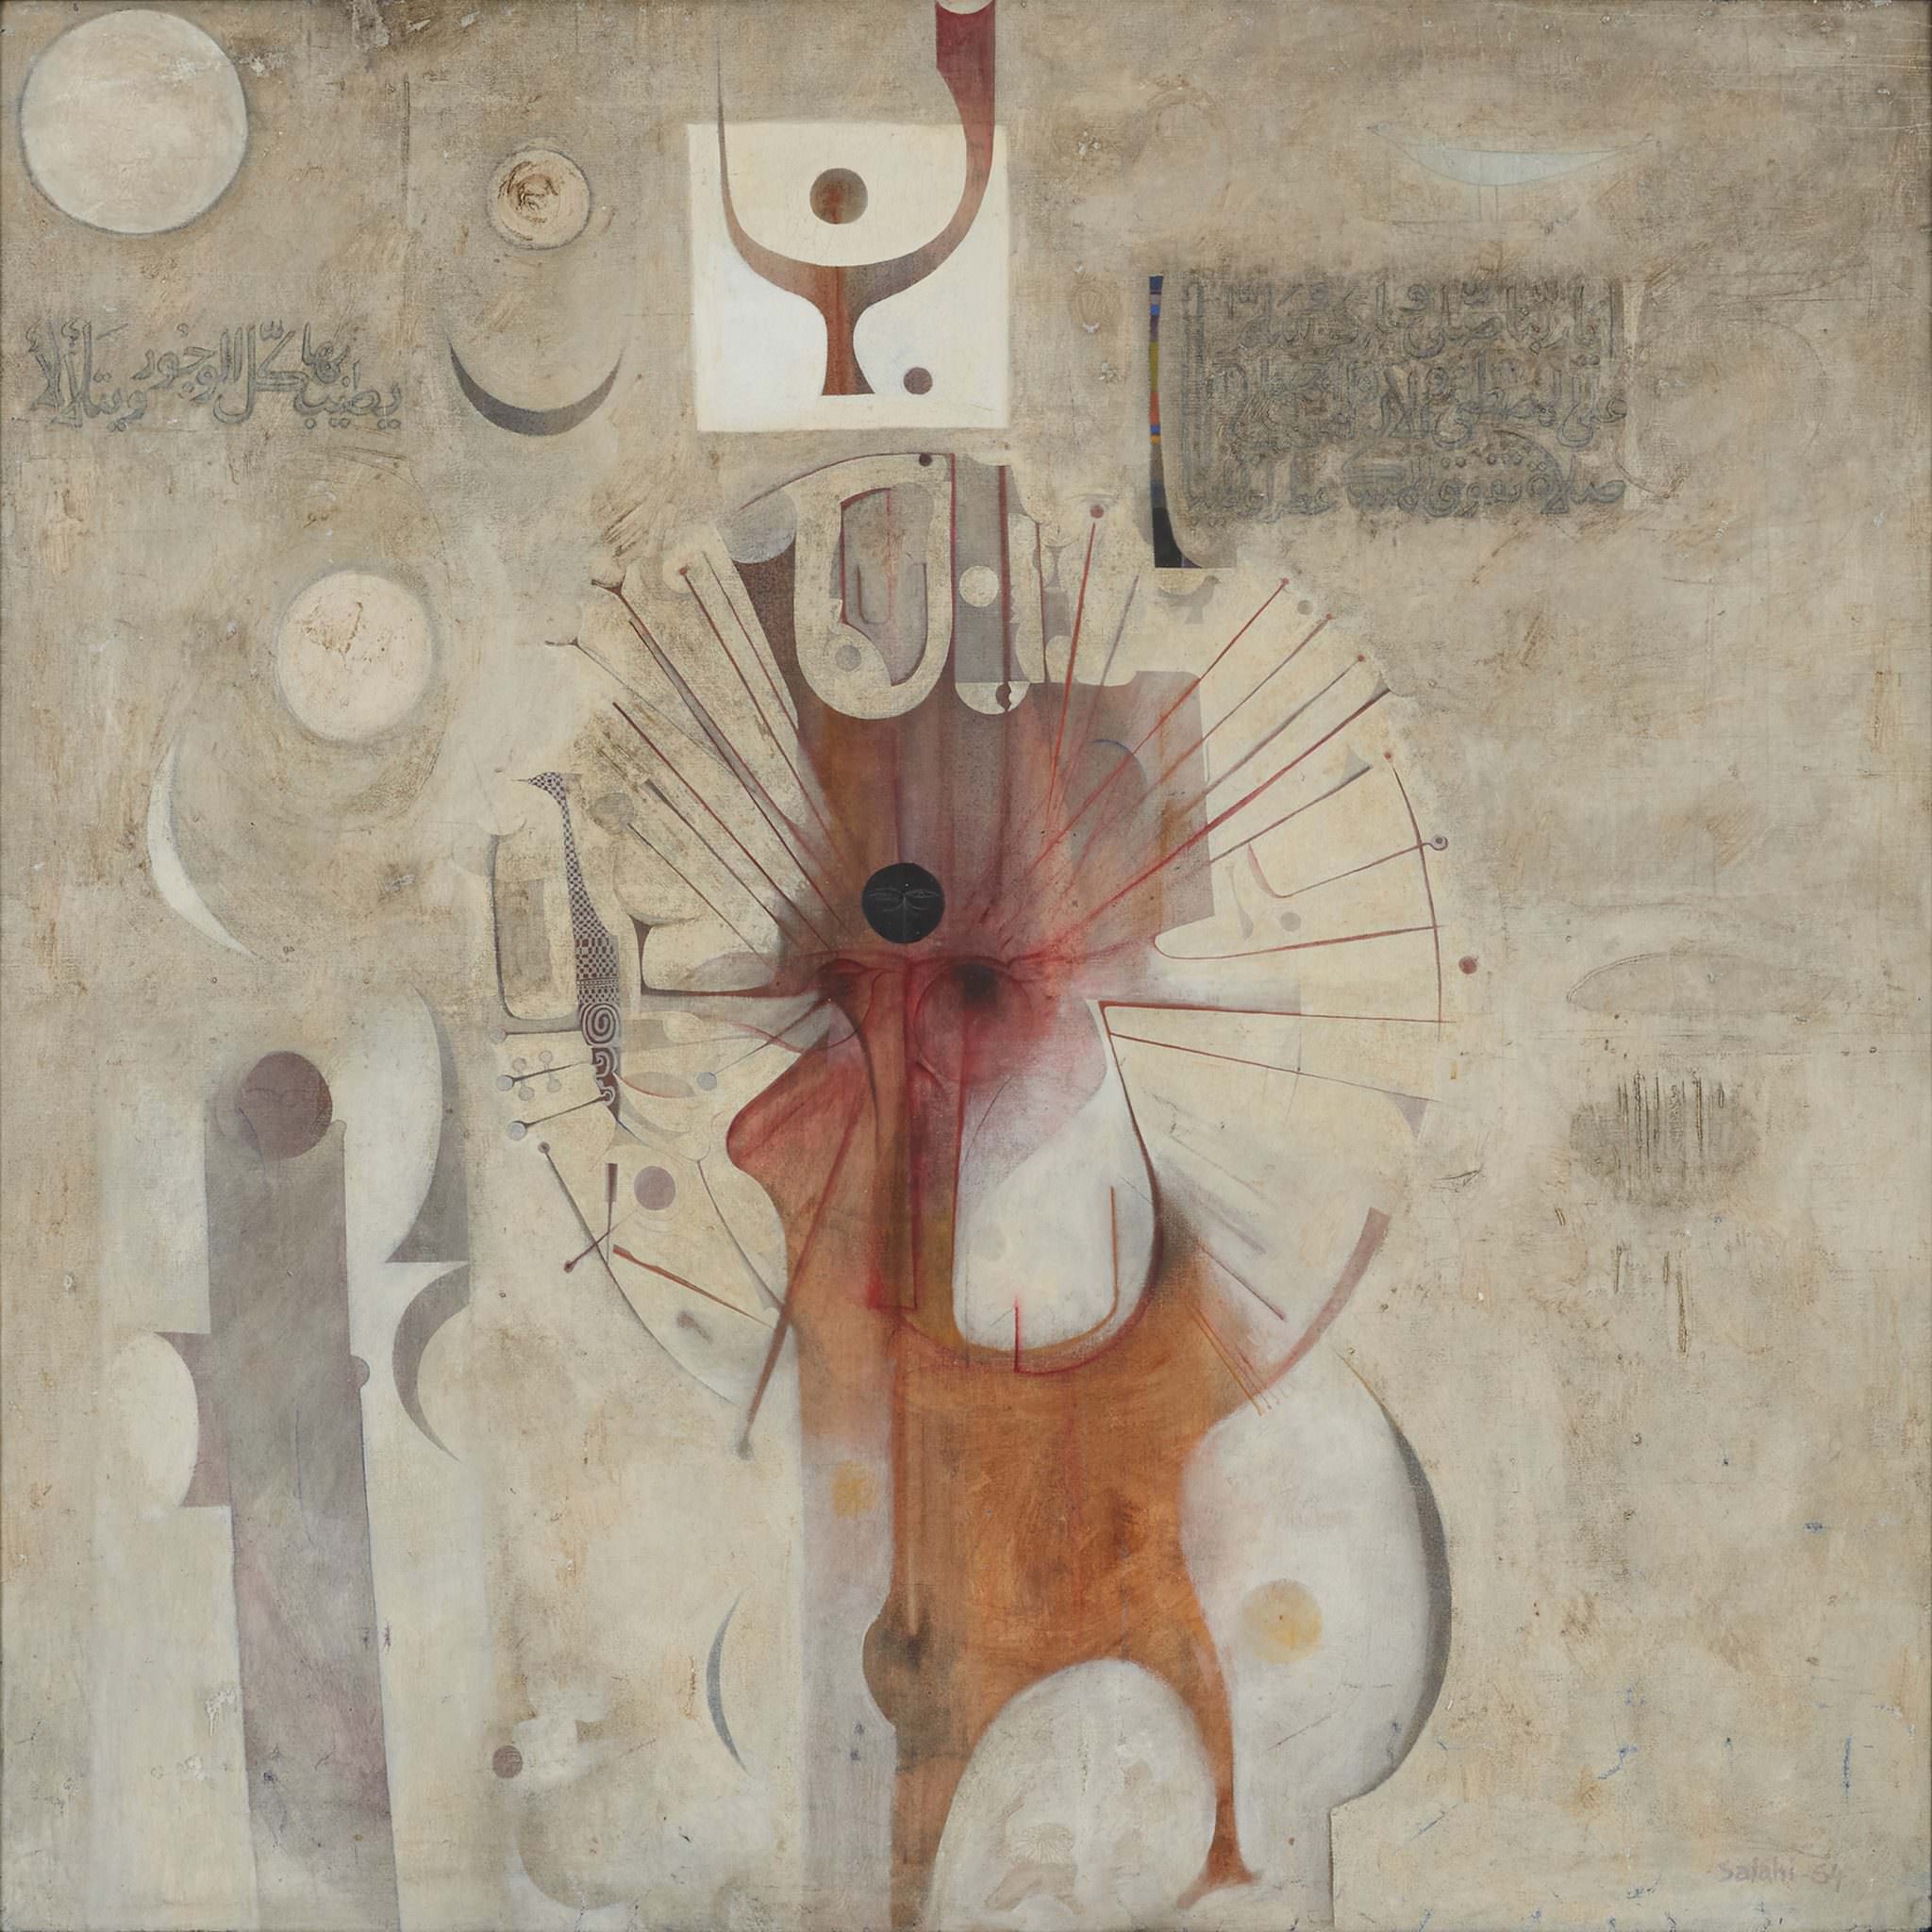 Ibrahim El-Salahi (Sudan), The Last Sound, 1964. Oil on canvas, 47 7/8 x 47 7/8 in. Collection of the Barjeel Art Foundation, Sharjah, UAE.